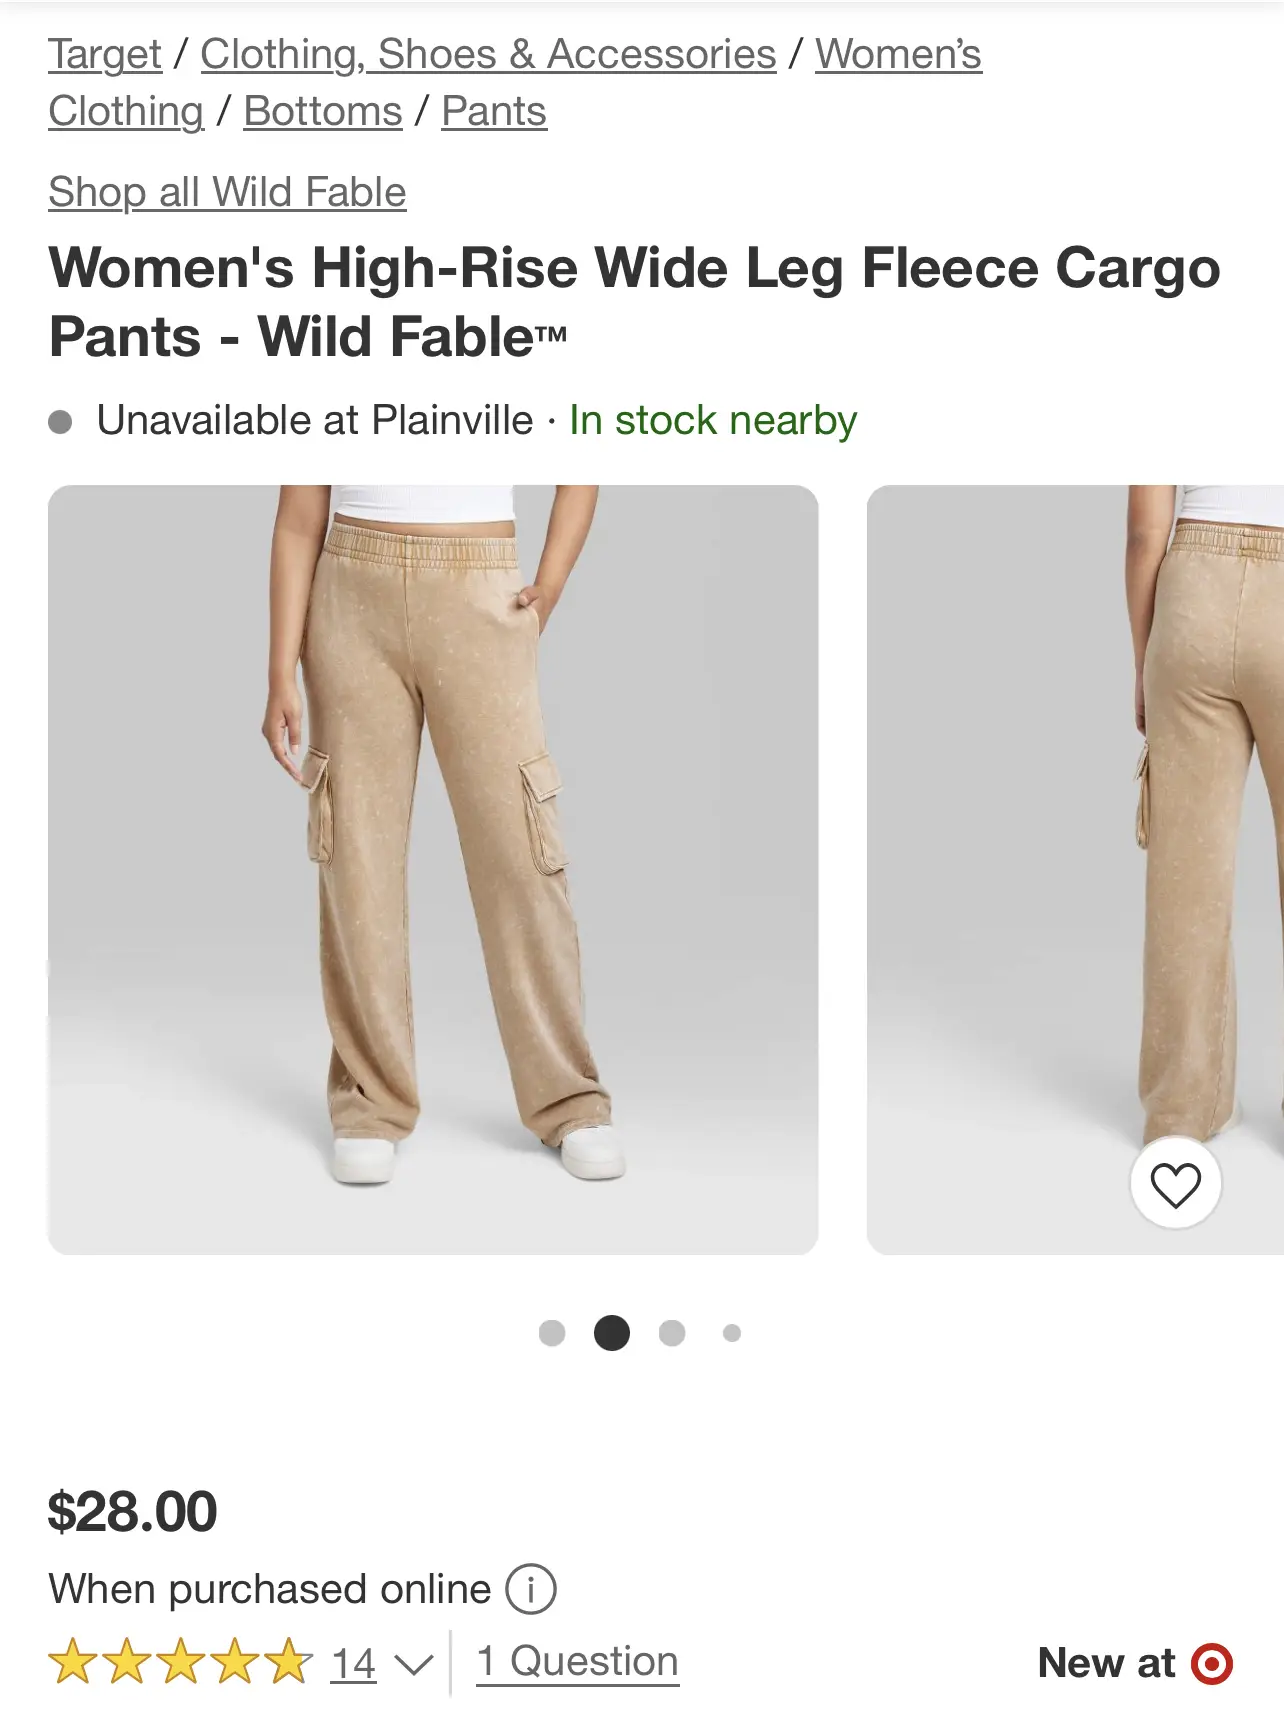 Women's High-rise Wide Leg Sweatpants - Universal Thread™ Pink Xl : Target